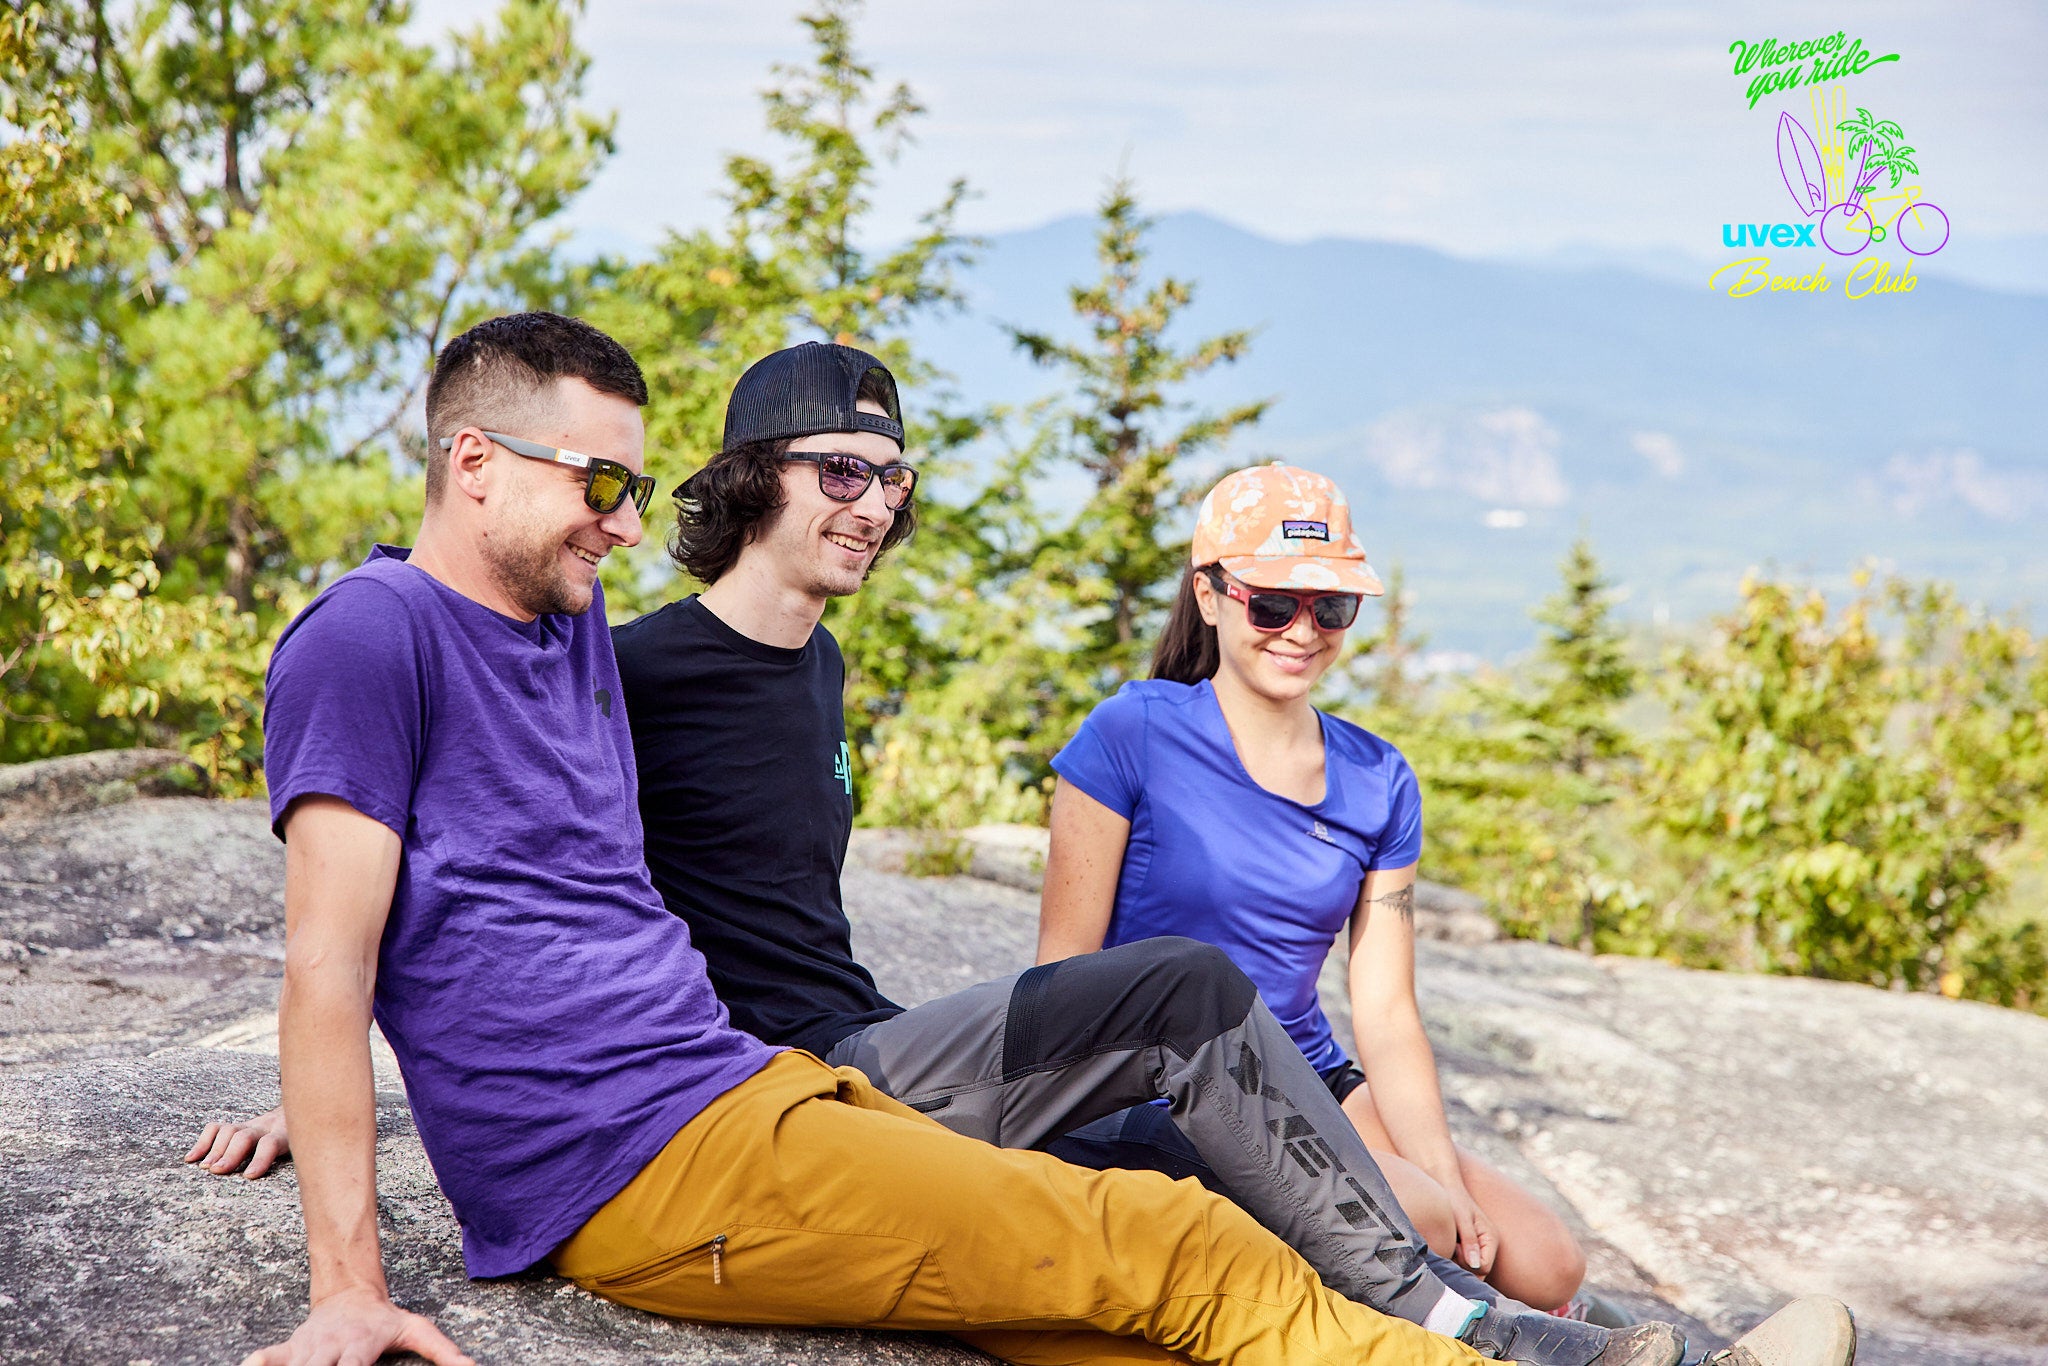 Three friends on a rock in sunglasses